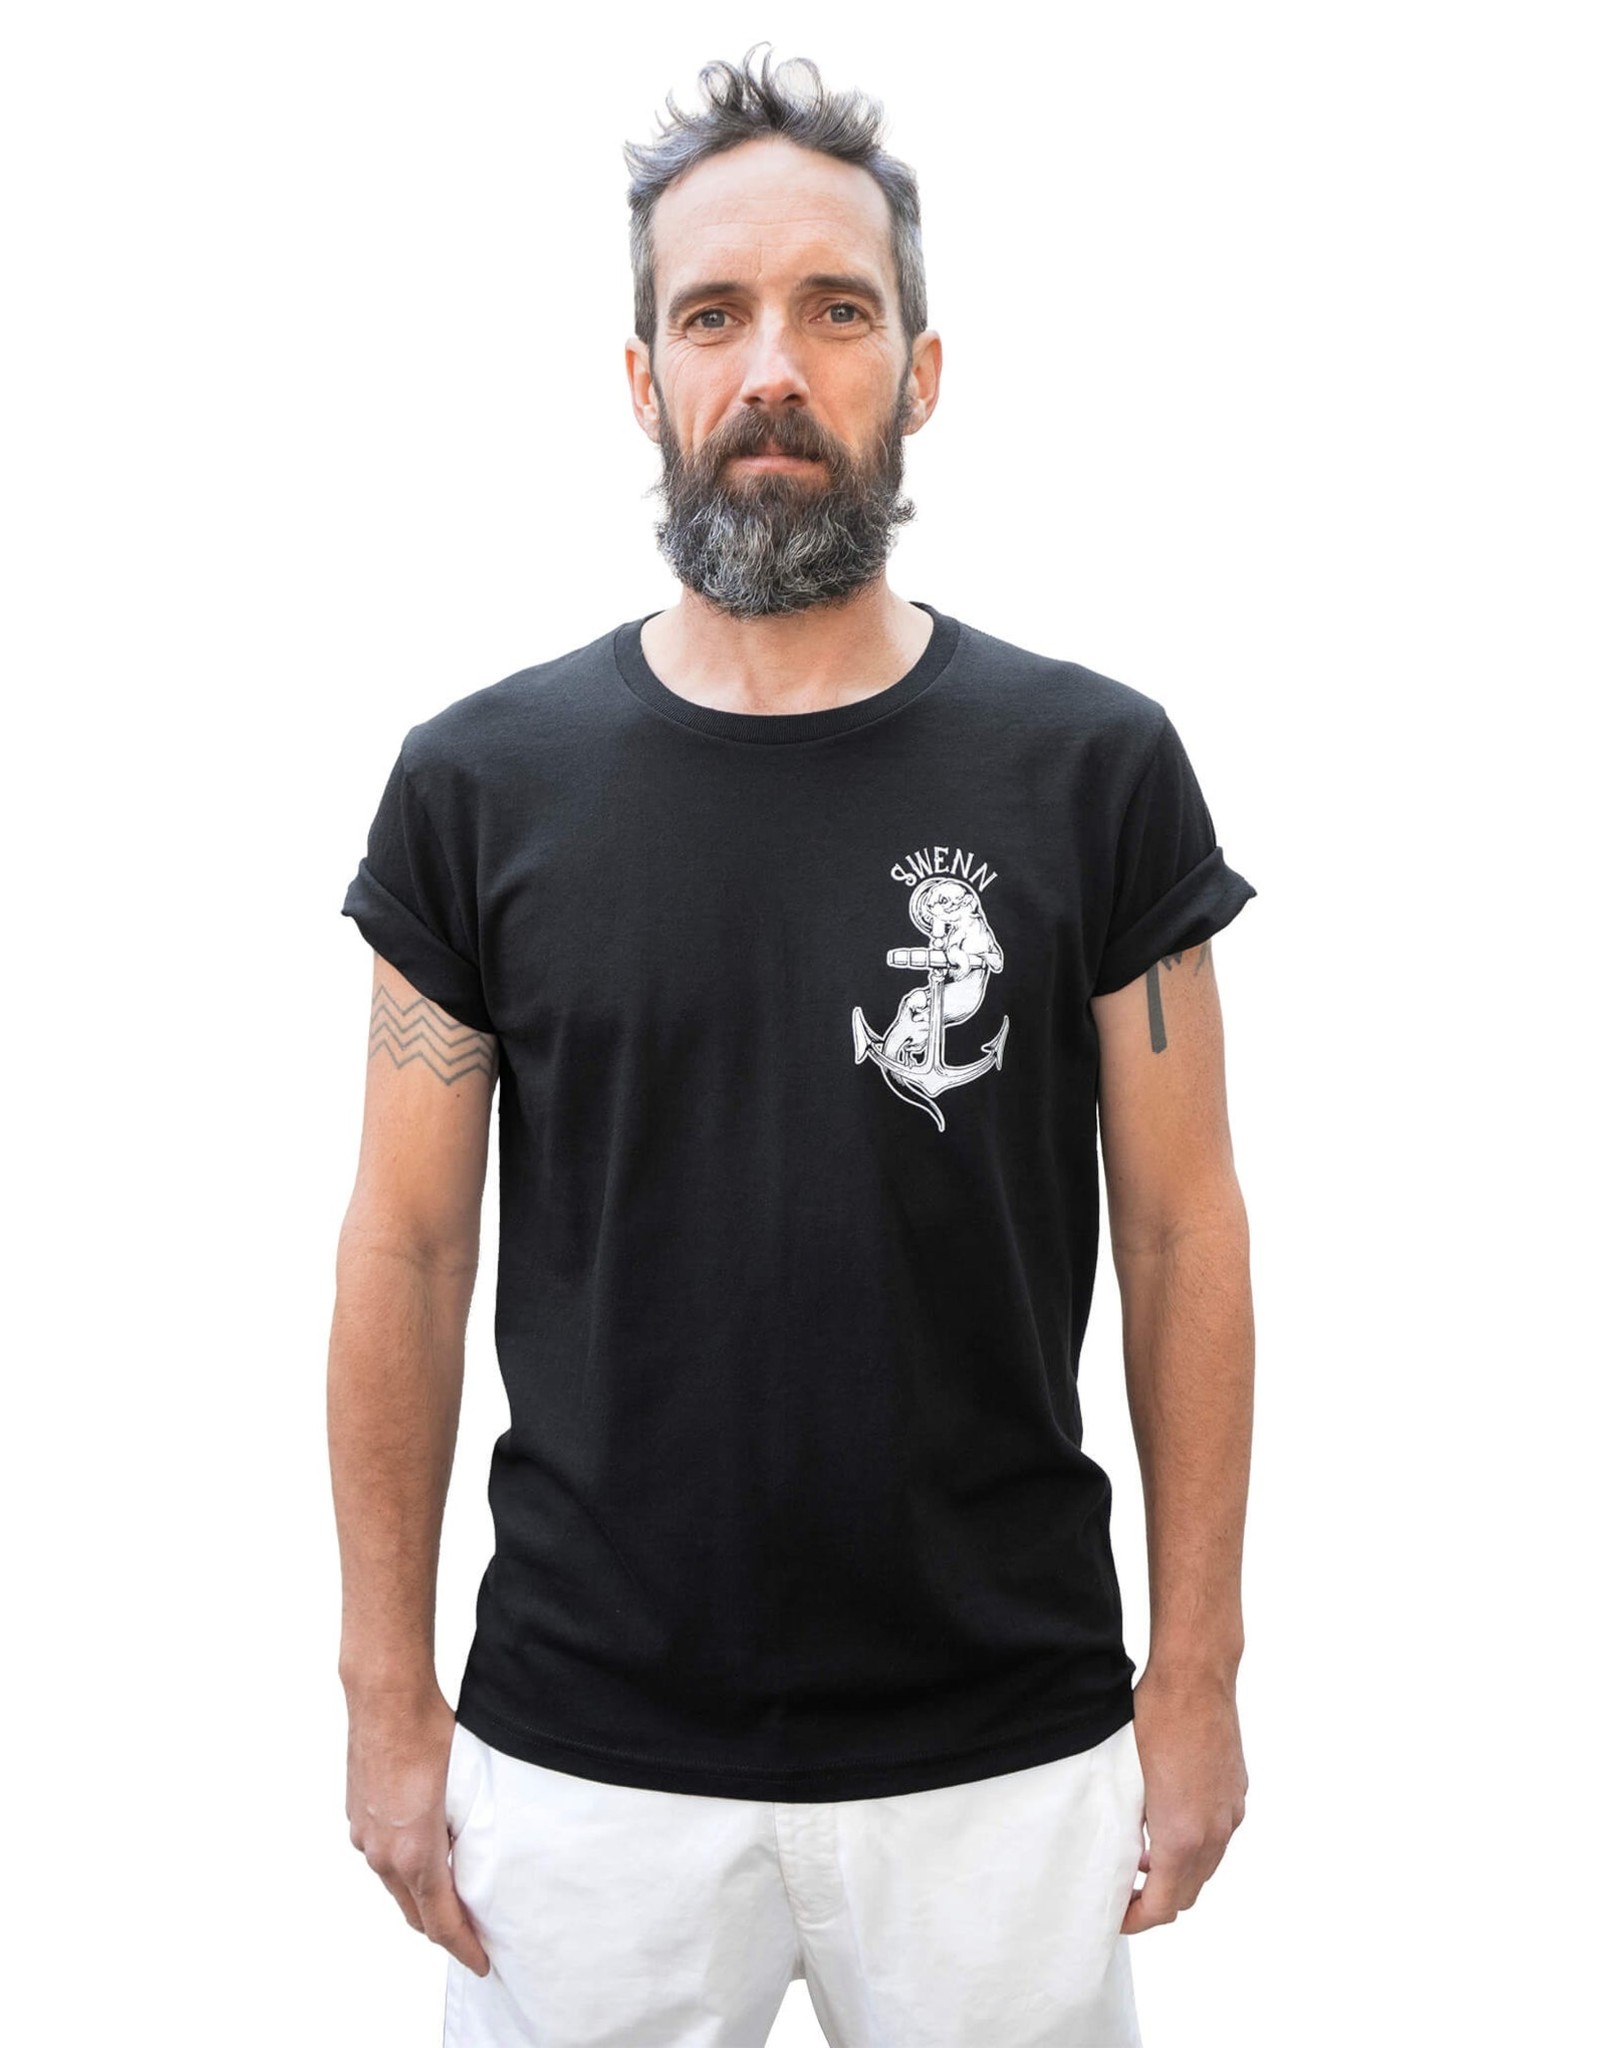 Swenn T-shirt unisexe Loutre noir